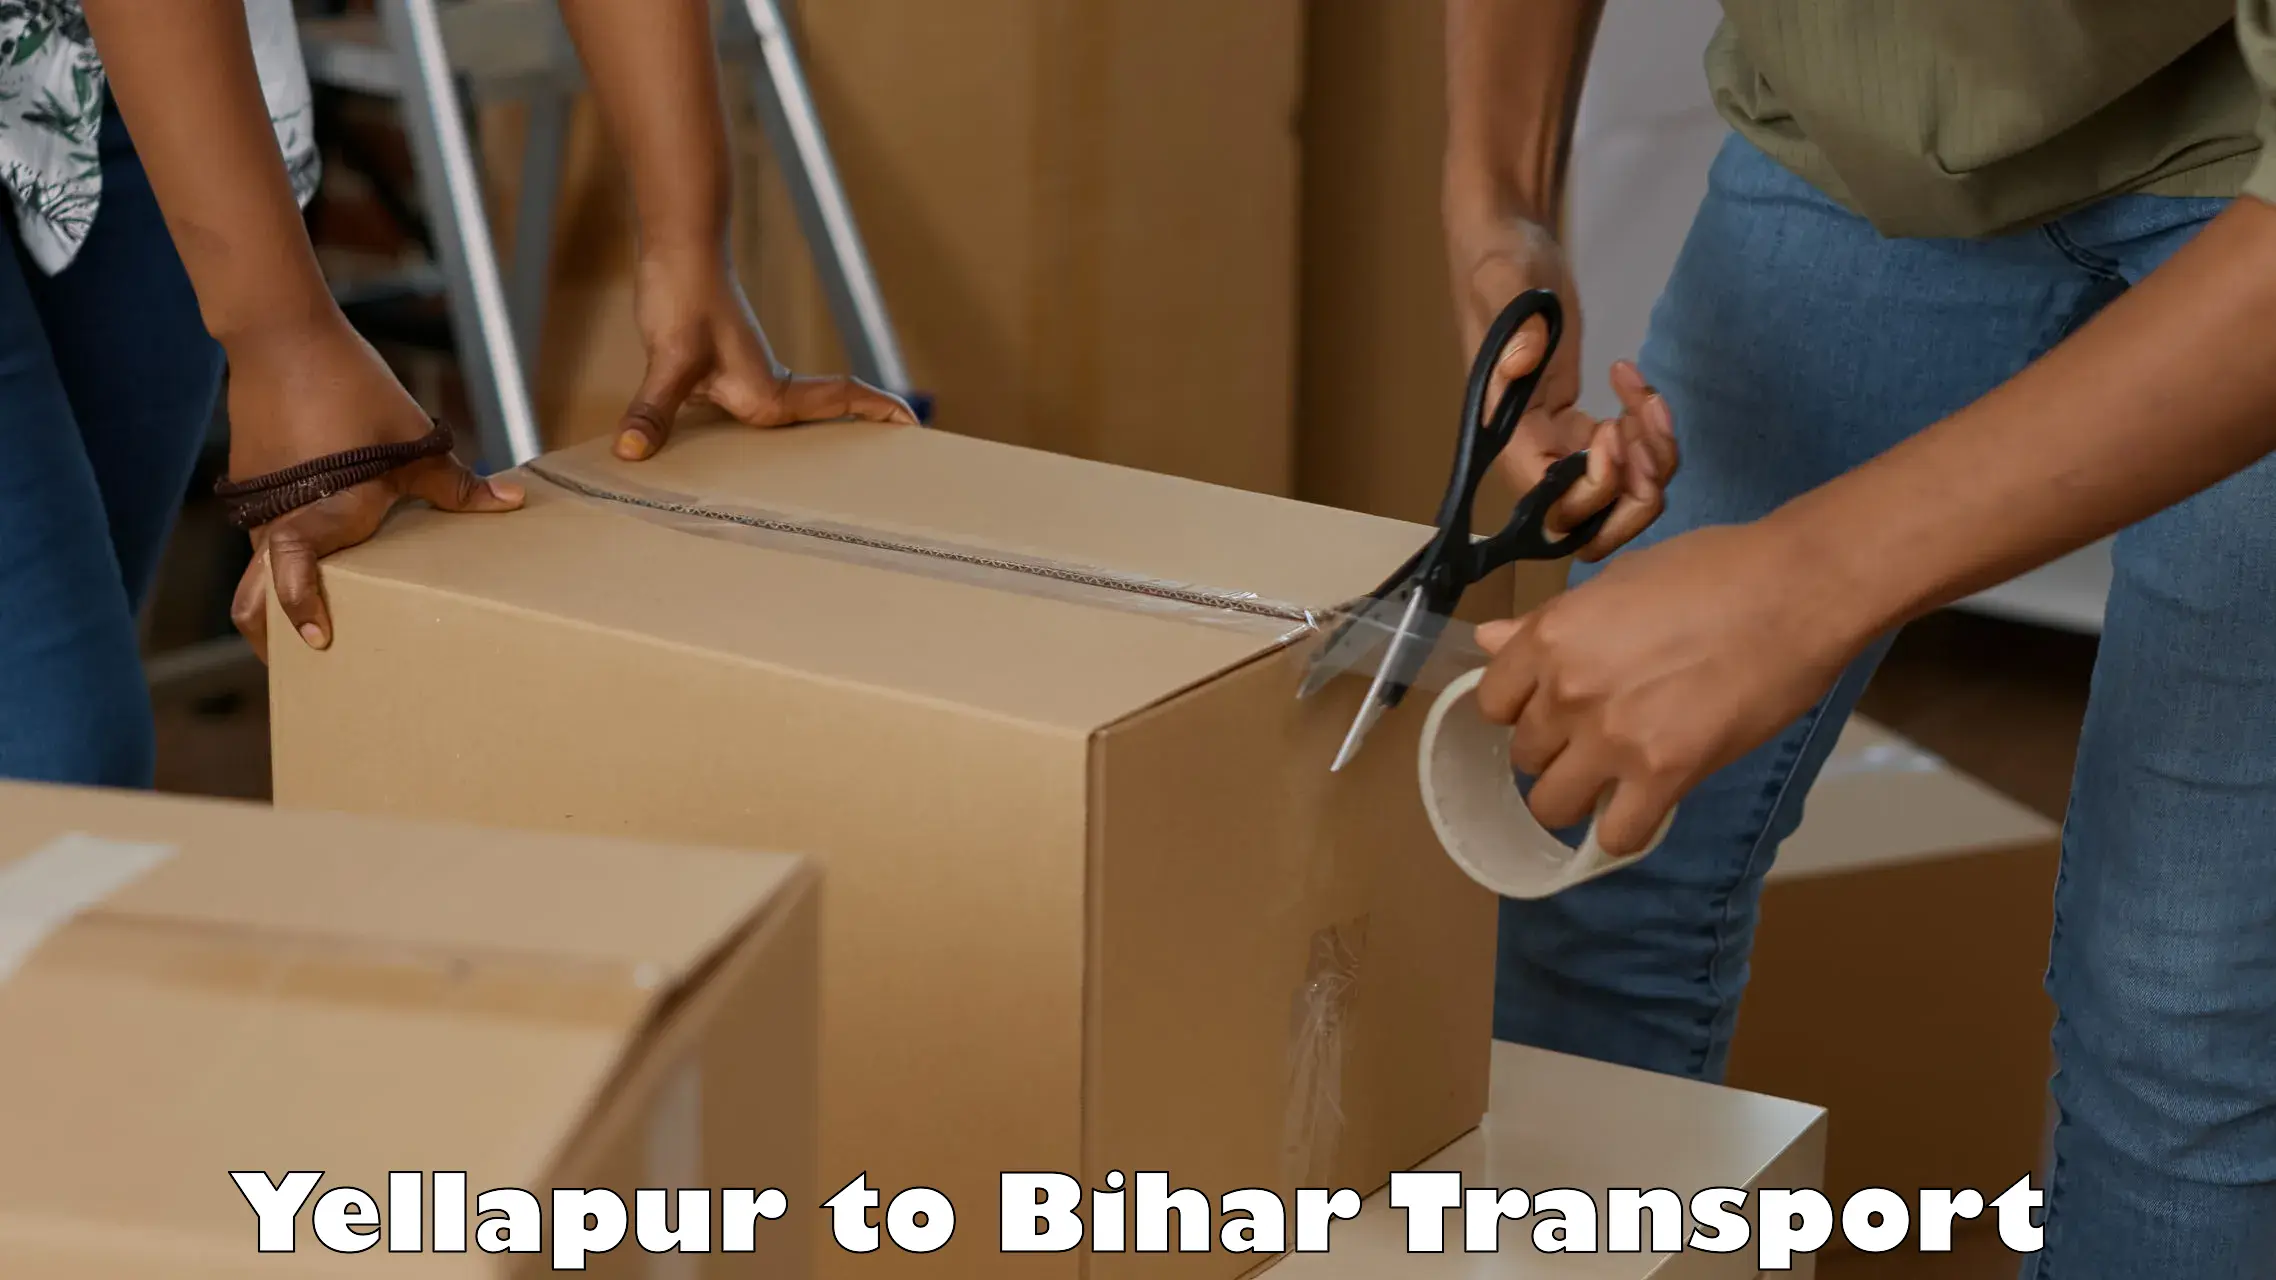 Truck transport companies in India Yellapur to Malmaliya